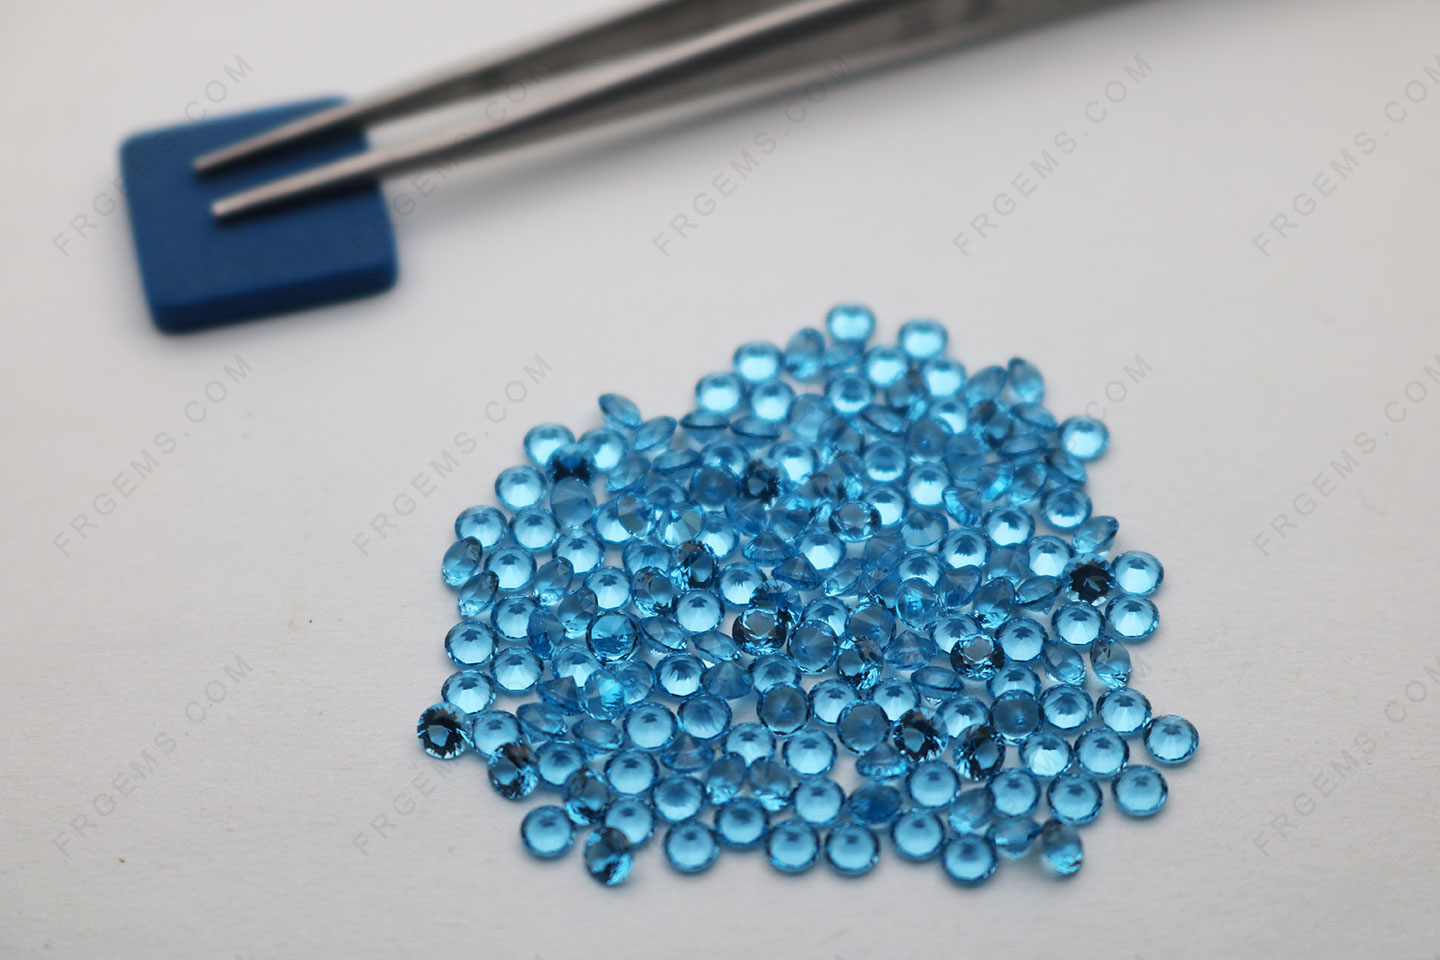 Nano Topaz Royal Blue color #147 Round Shape Faceted Cut 3mm Gemstones Supplier